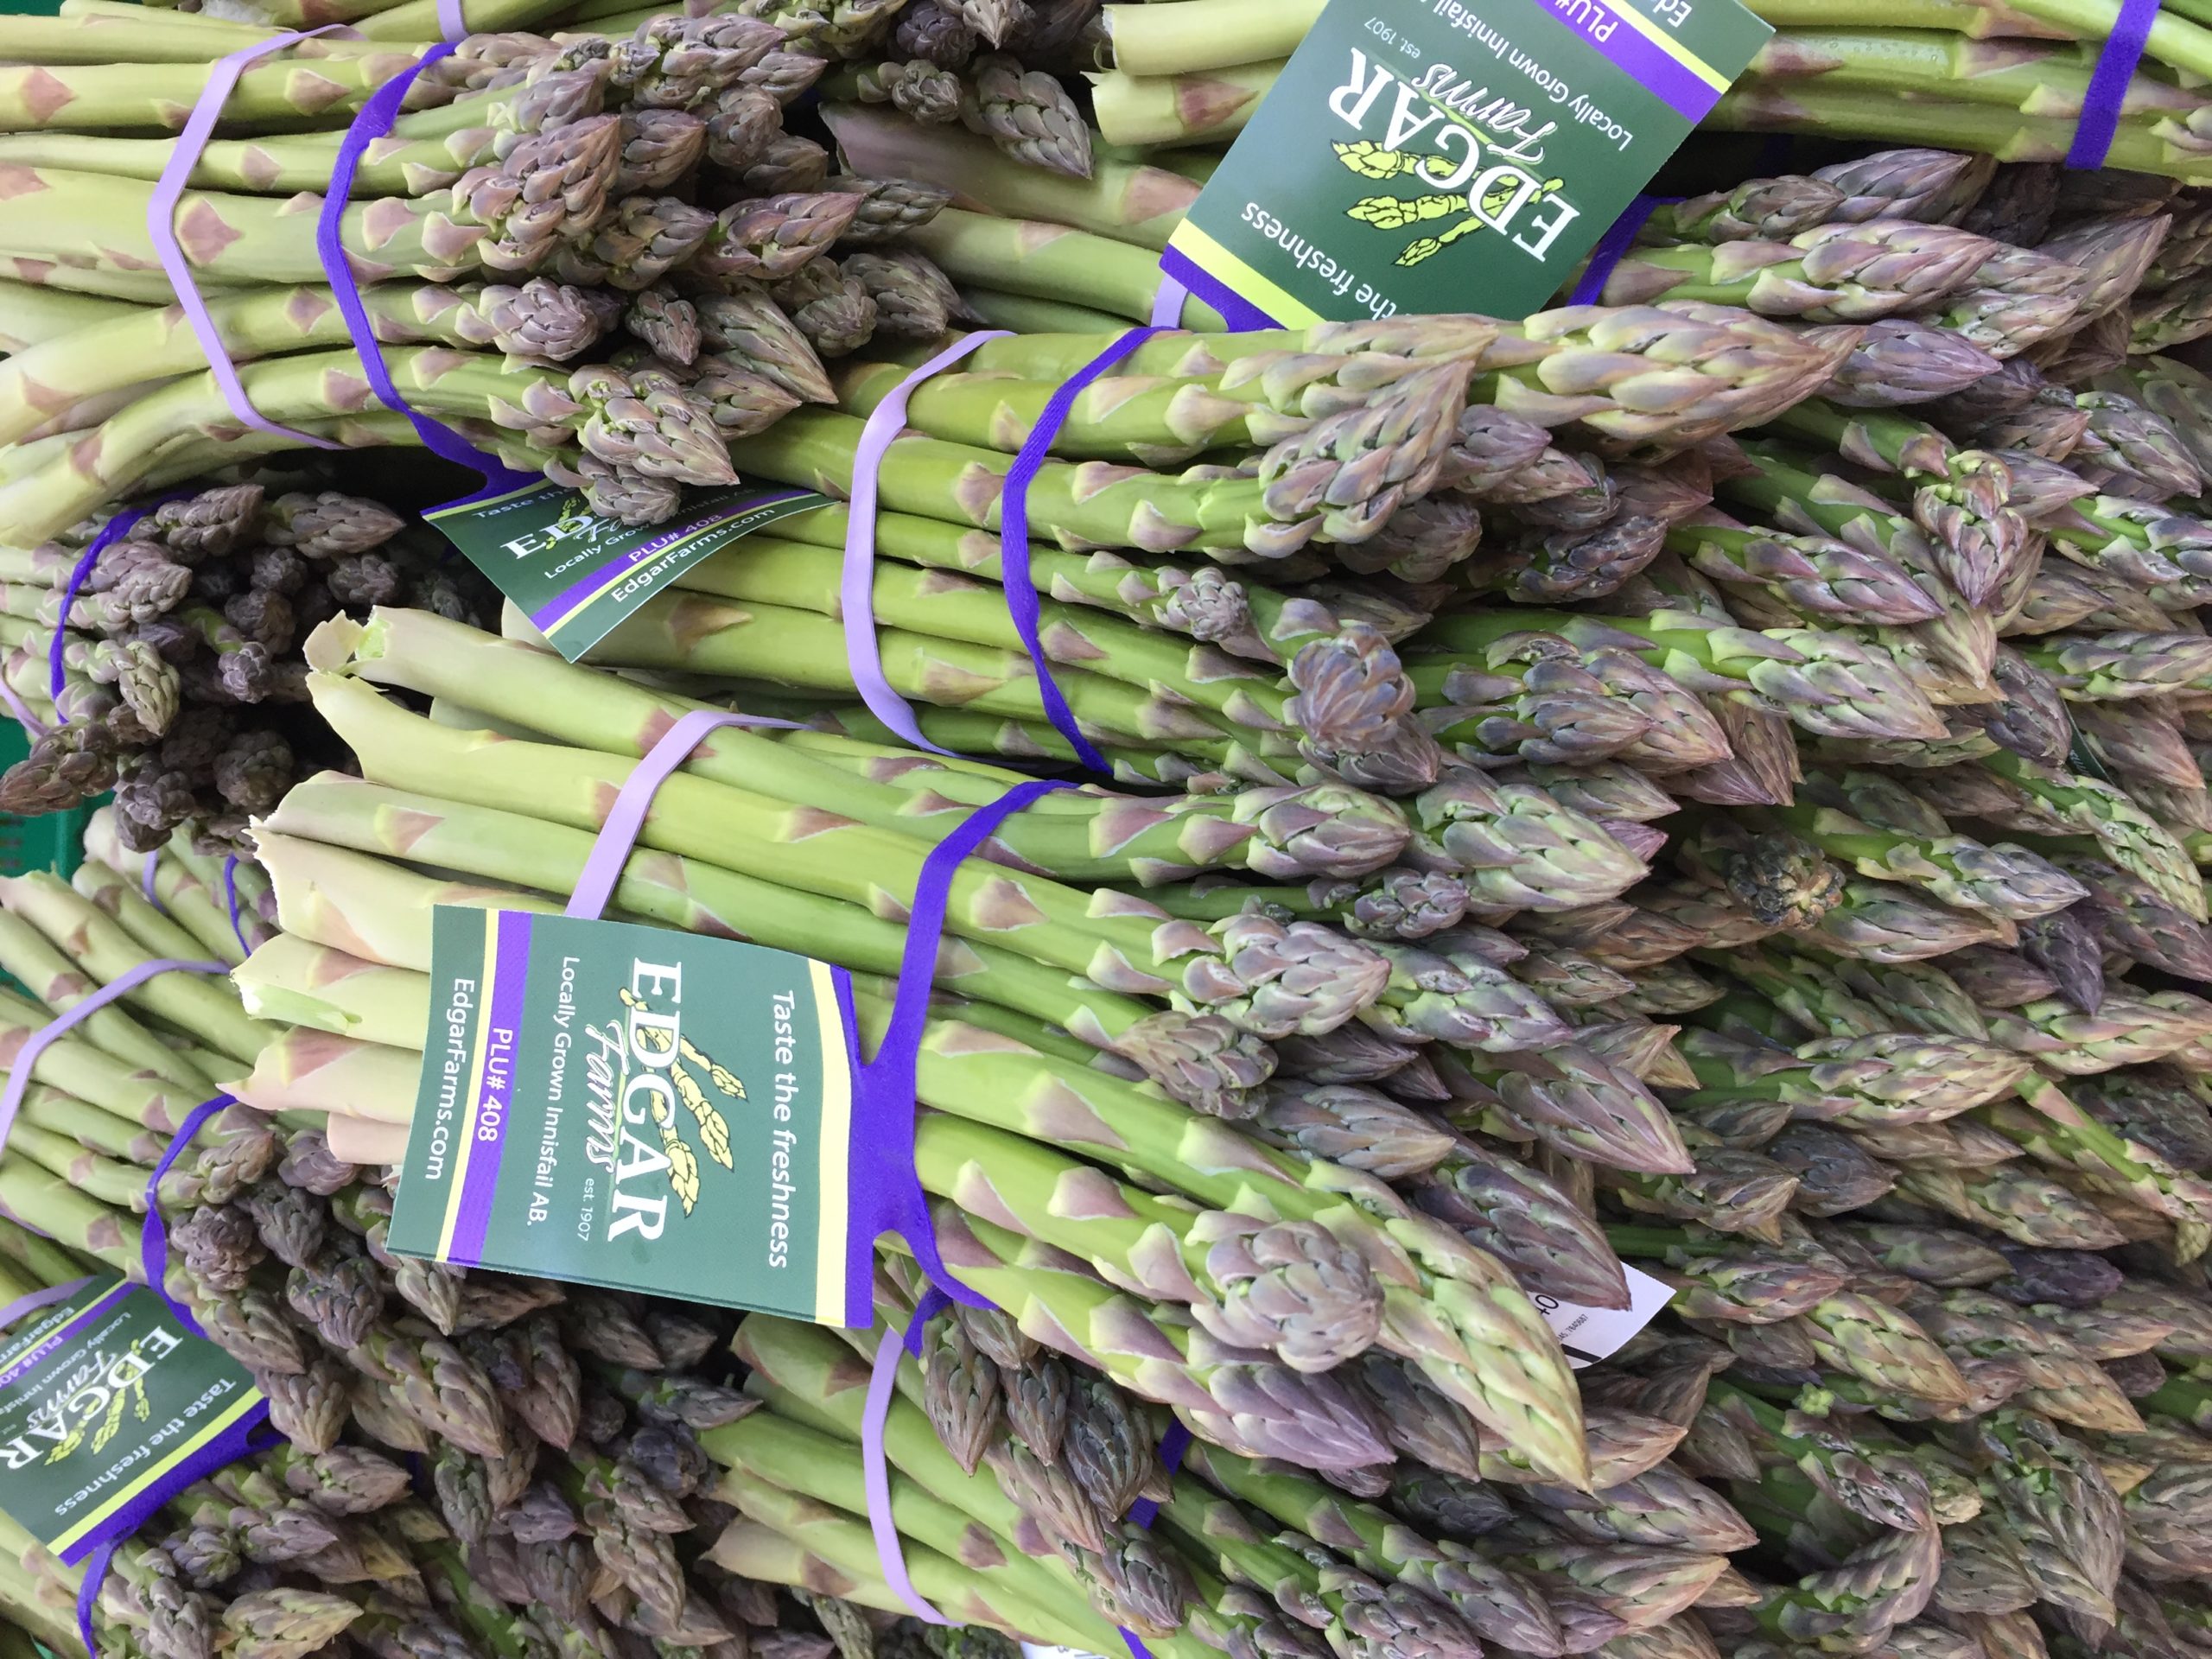 Edgar-Farms-asparagus | The Alberta Farmers' Market Association